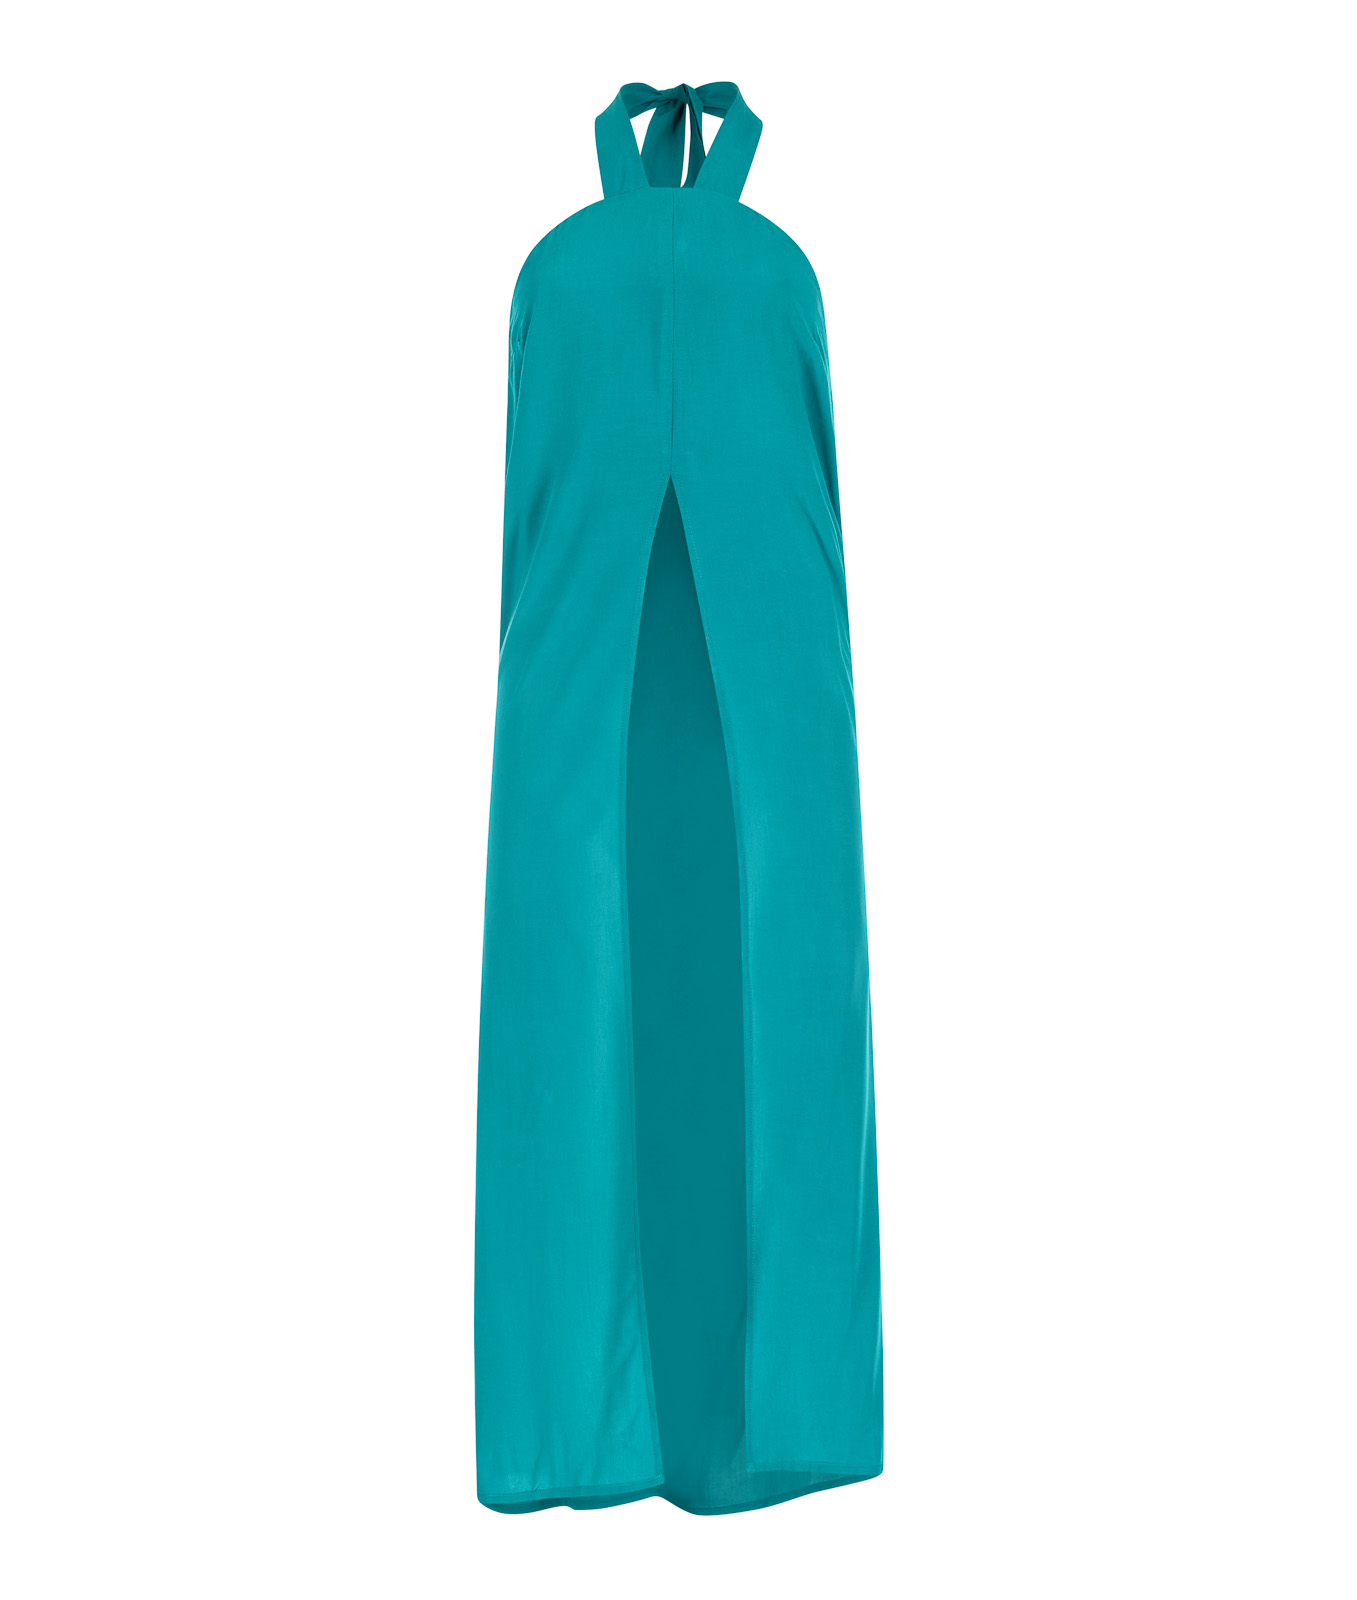 Gilda Turquoise Top